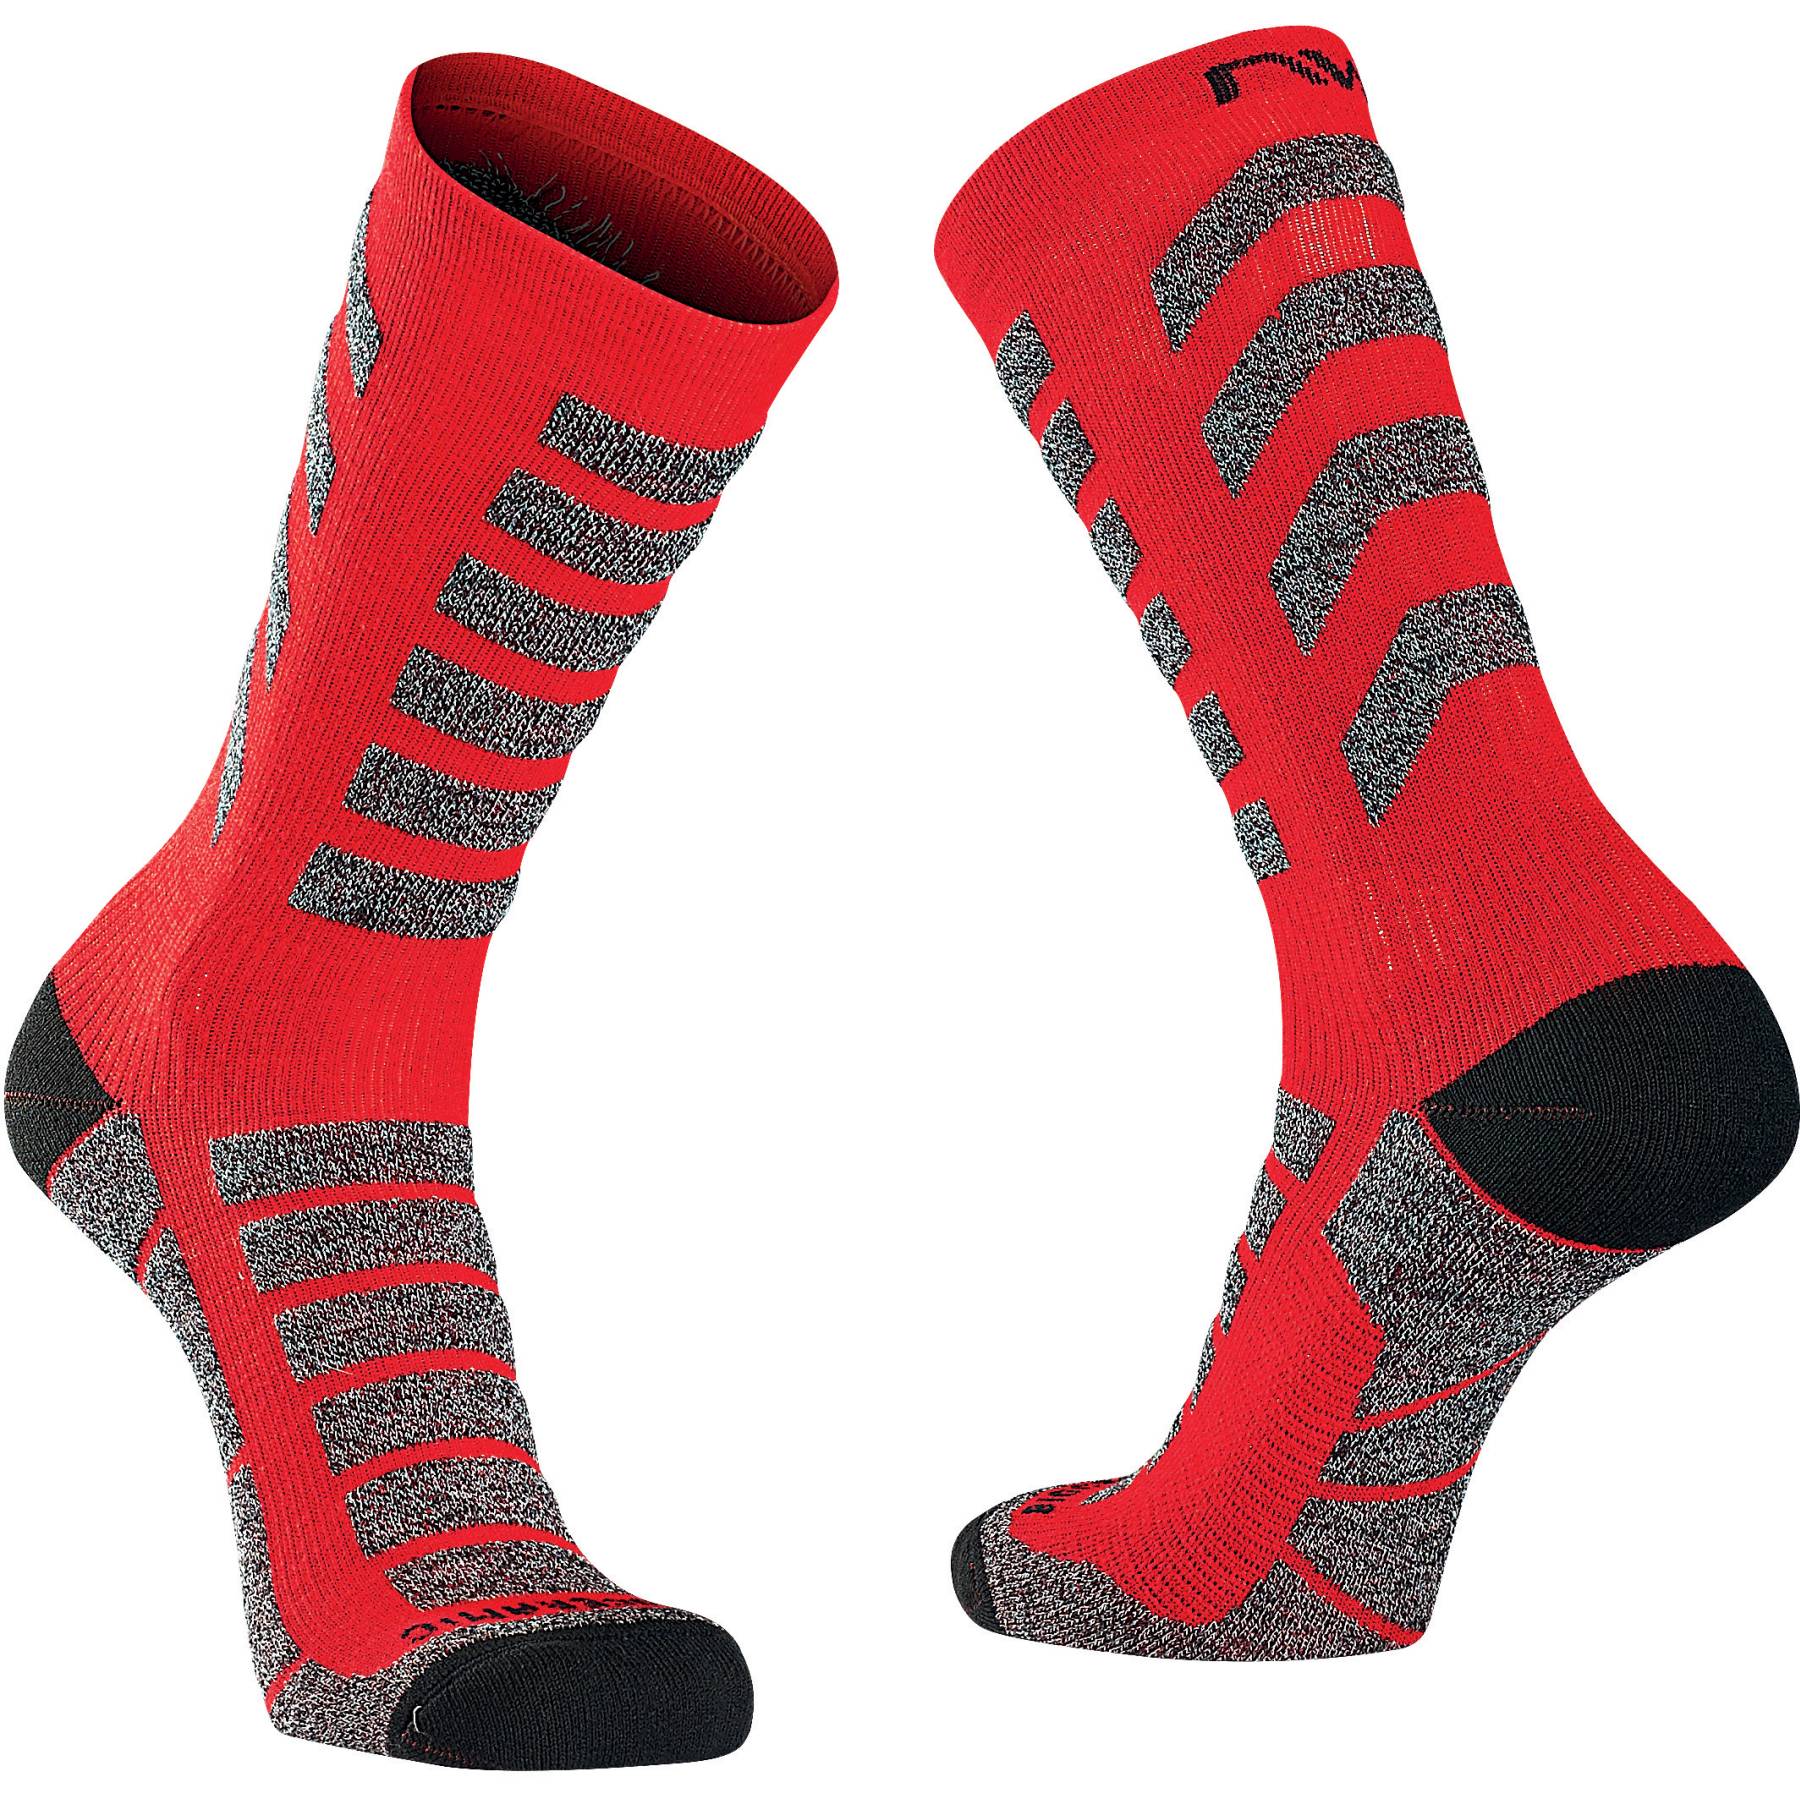 Picture of Northwave Husky Ceramic High Socks - red/black 32